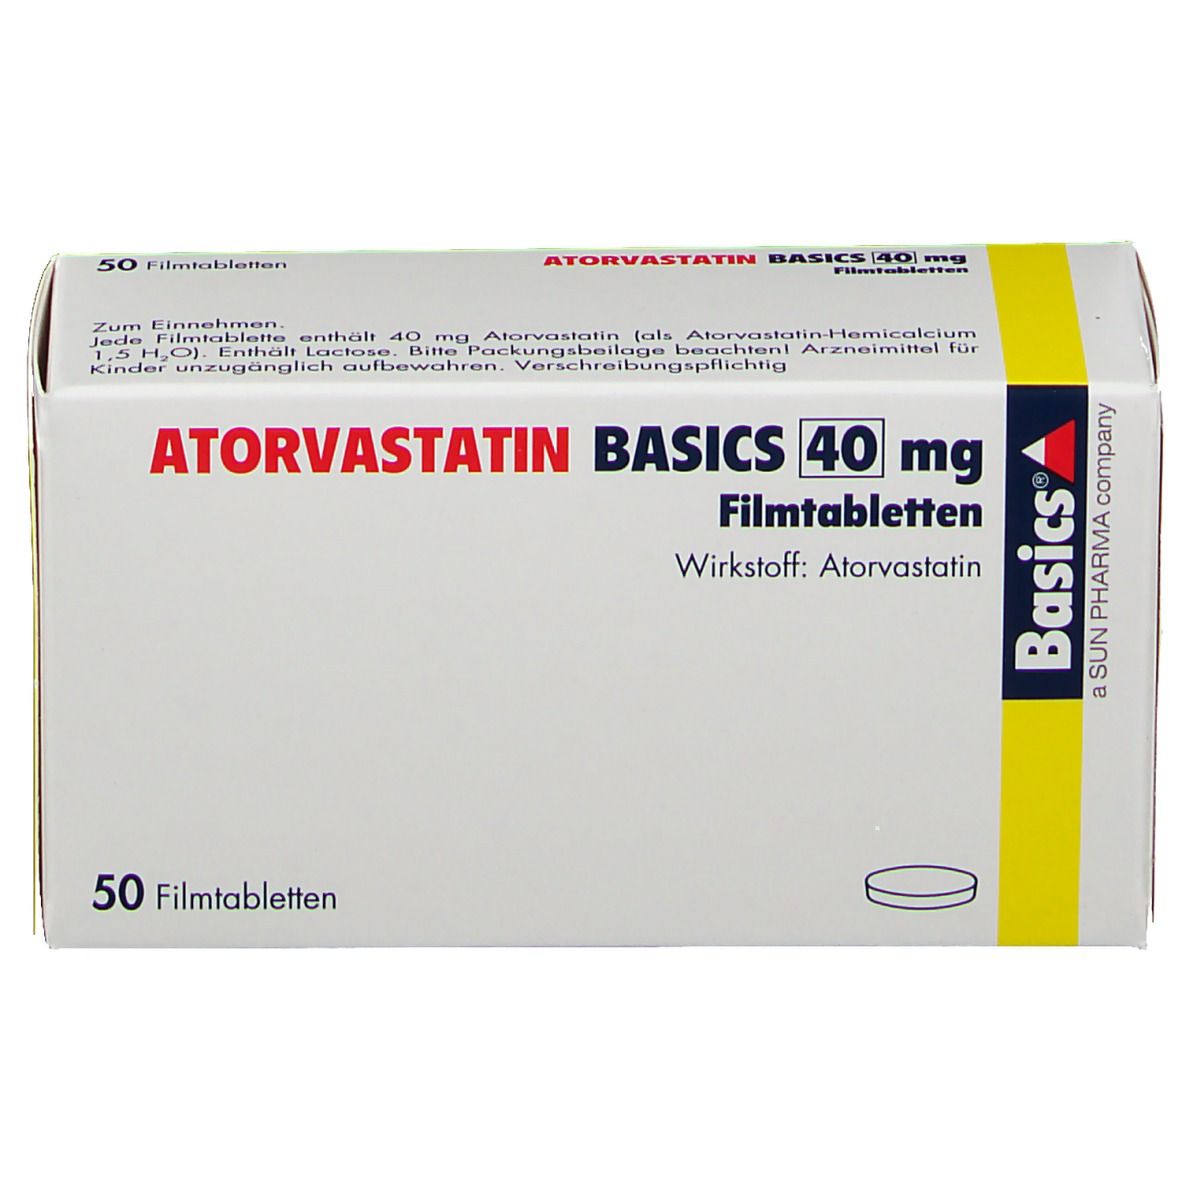 ATORVASTATIN BASICS 40 mg